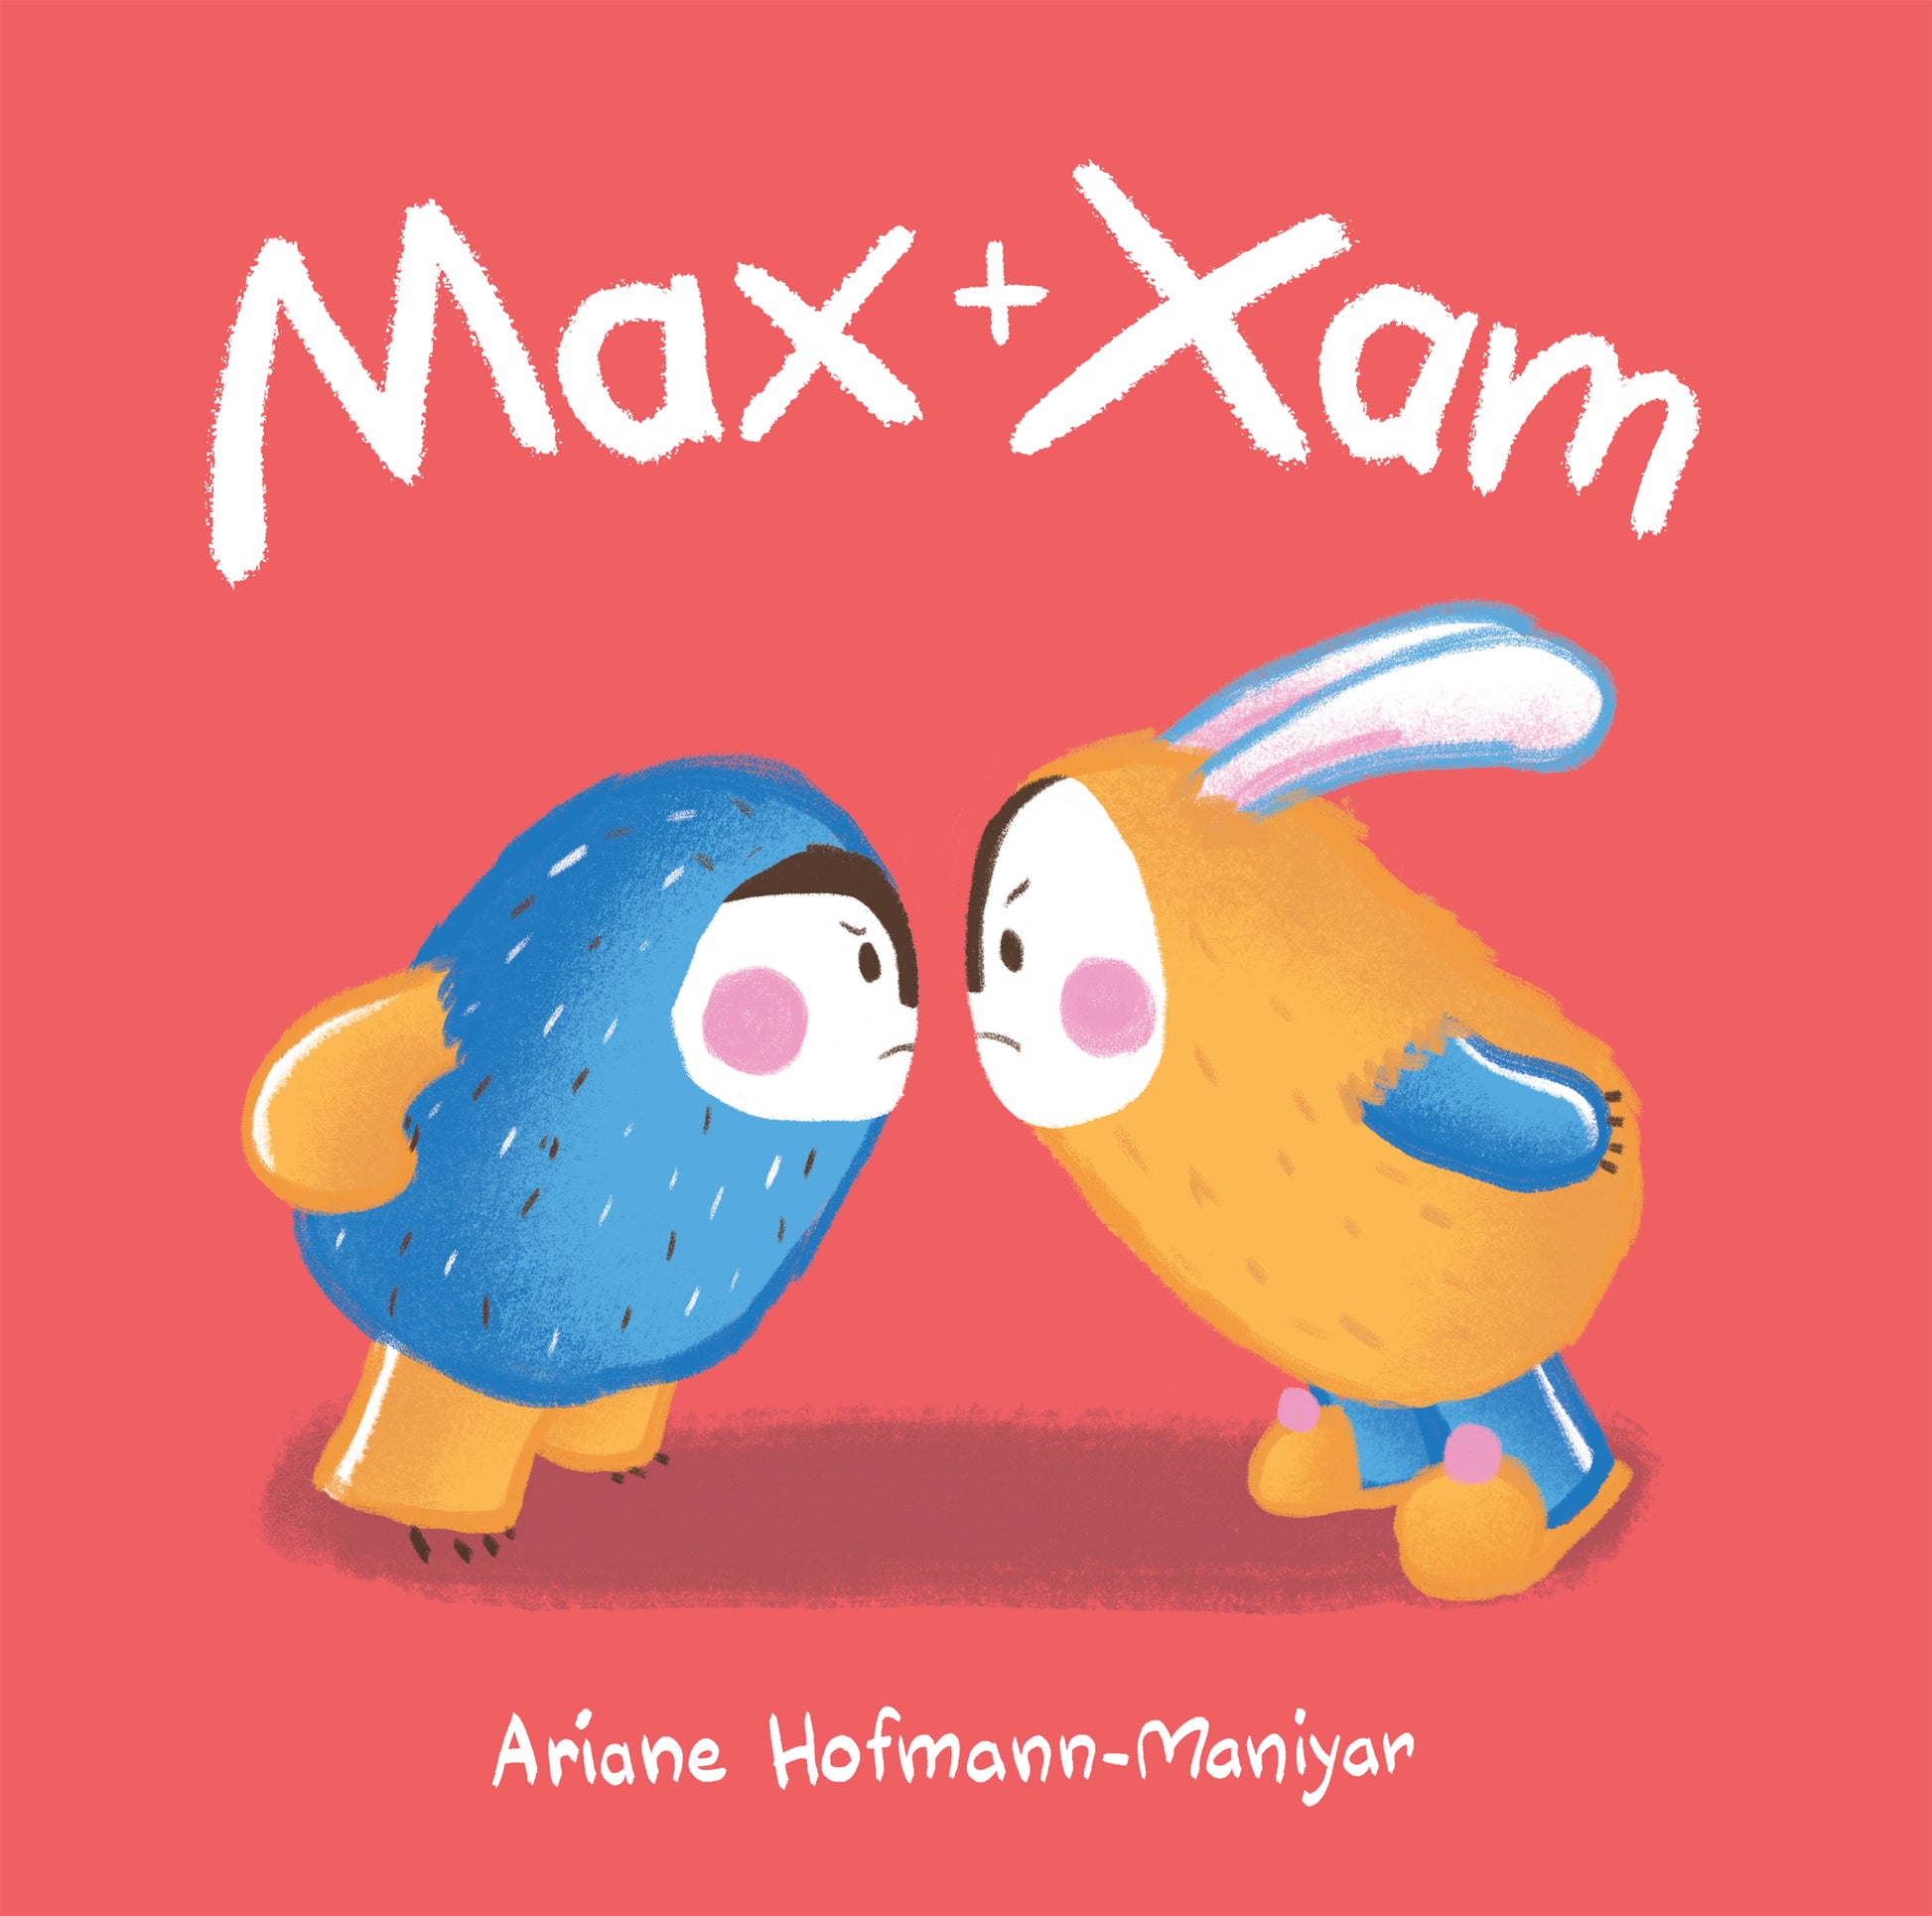 Max and Xam